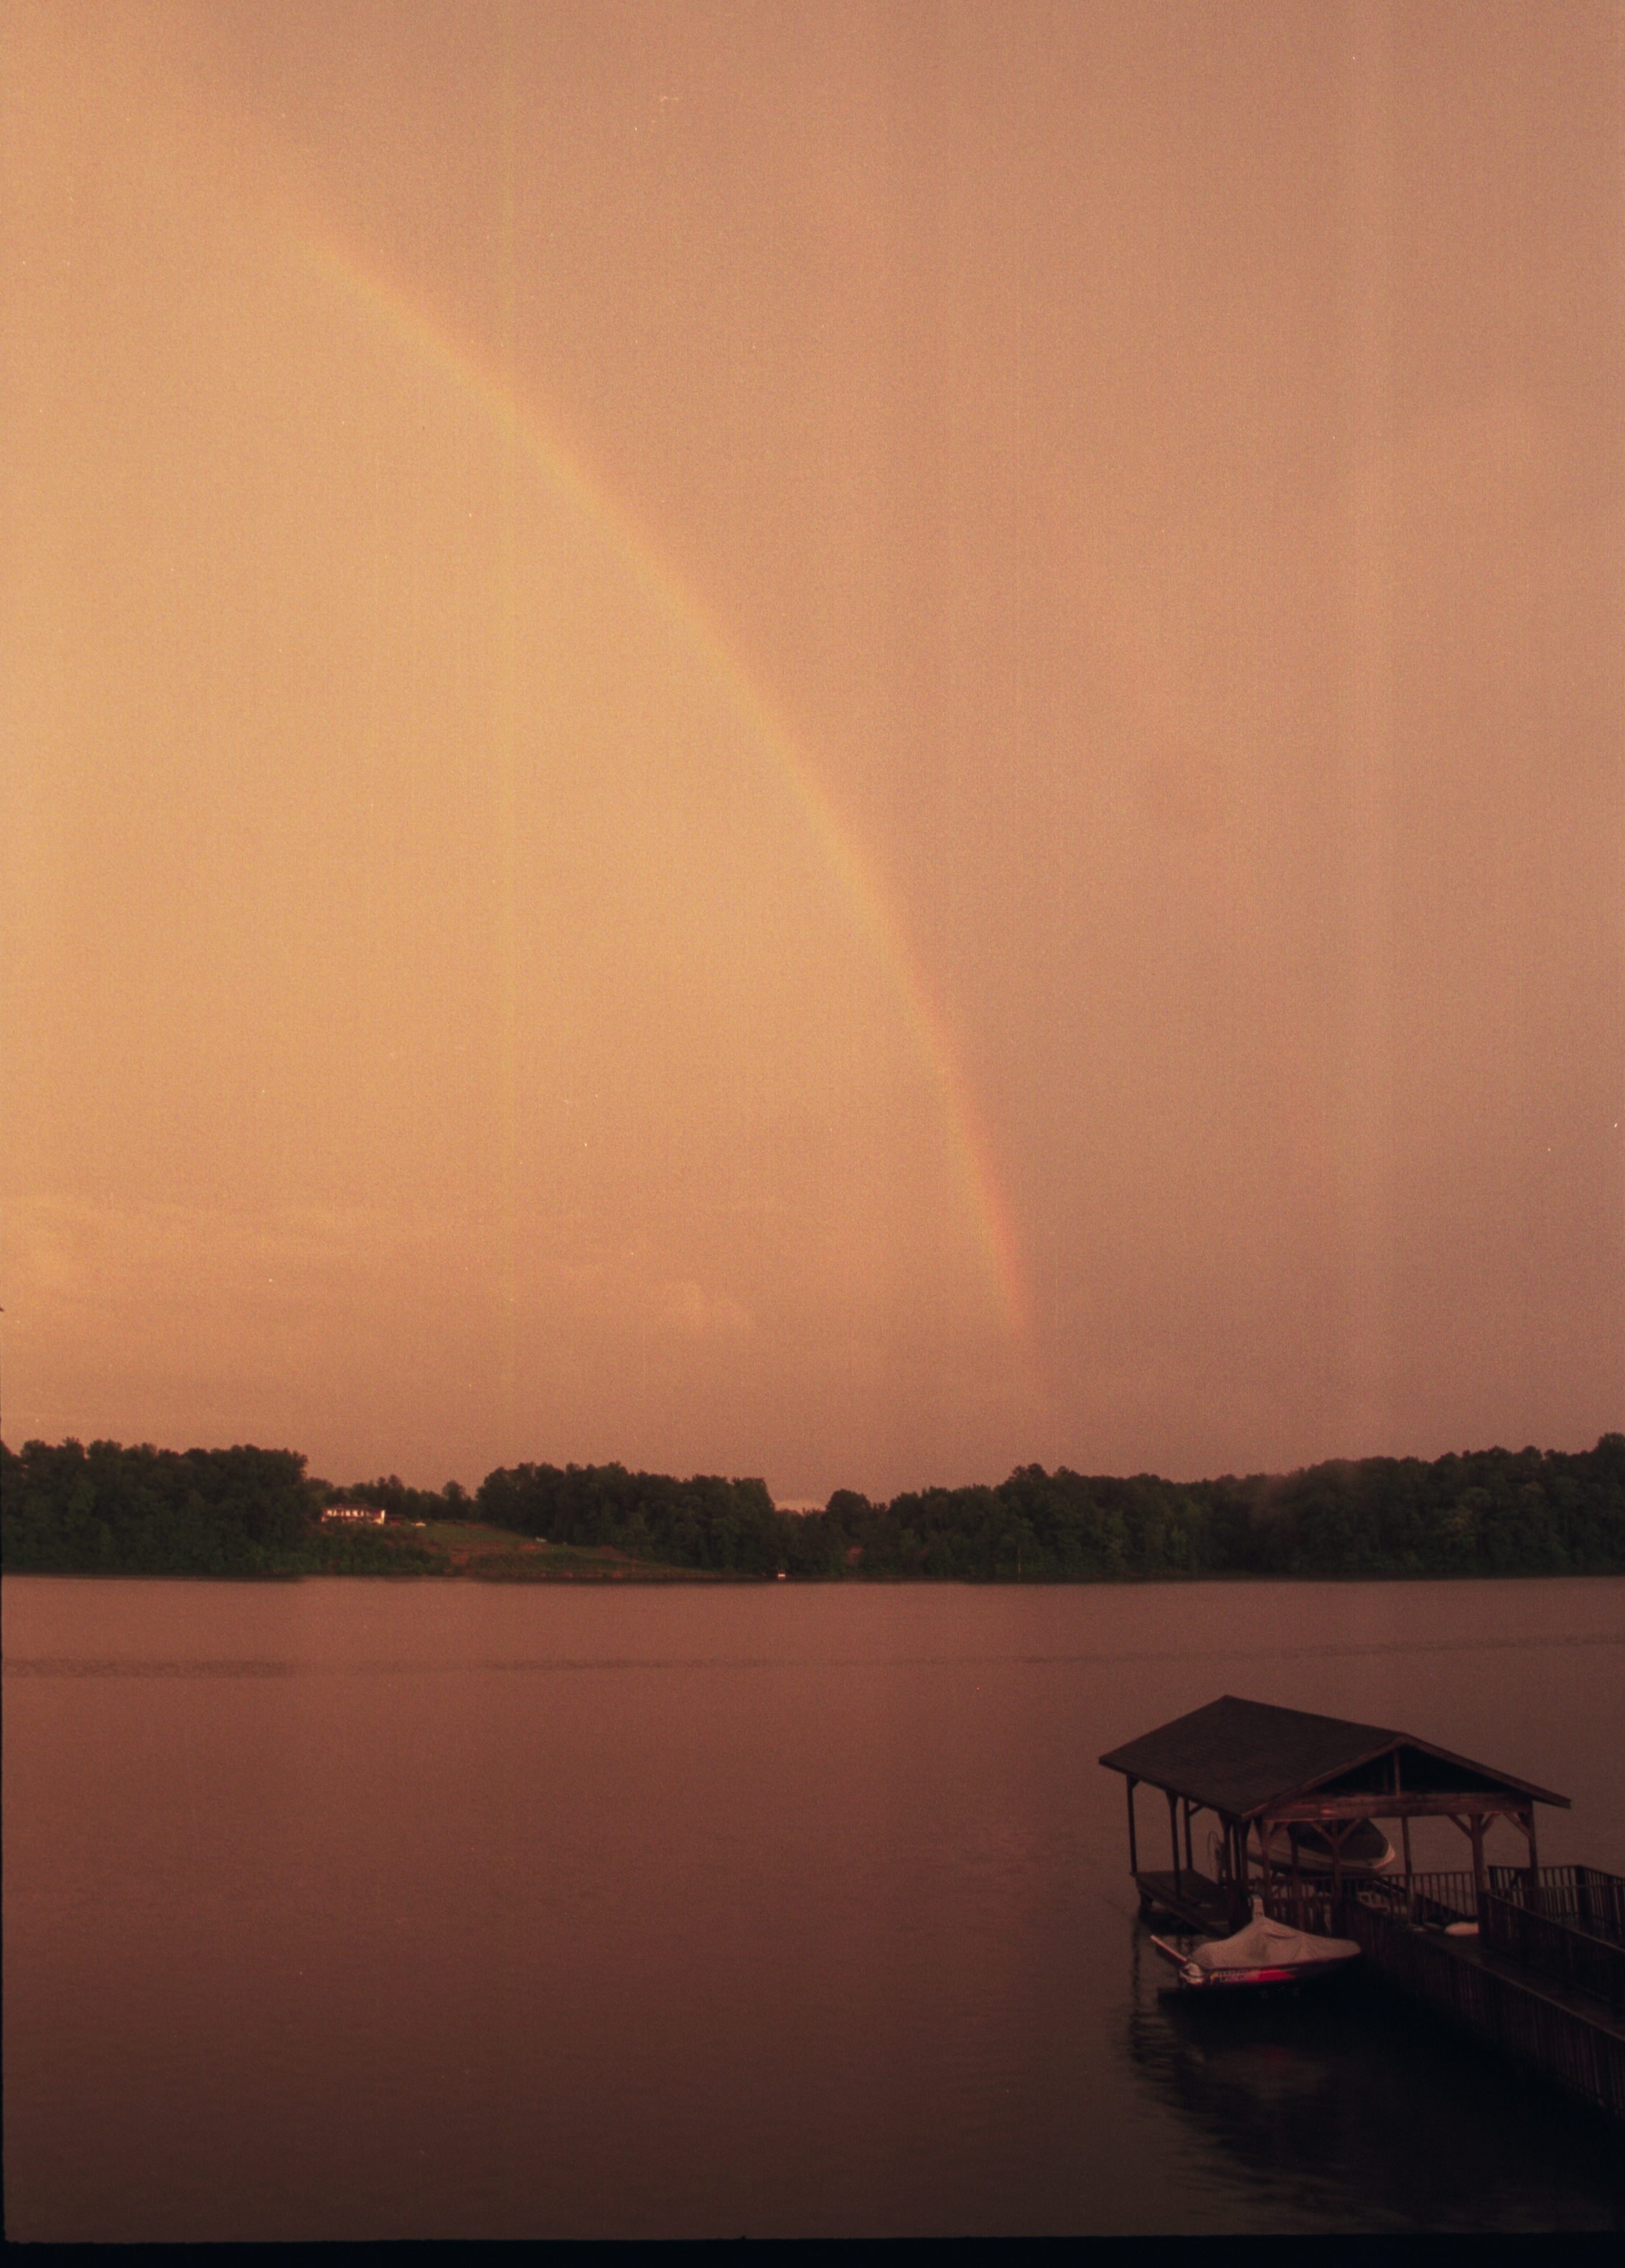 rainbow 2